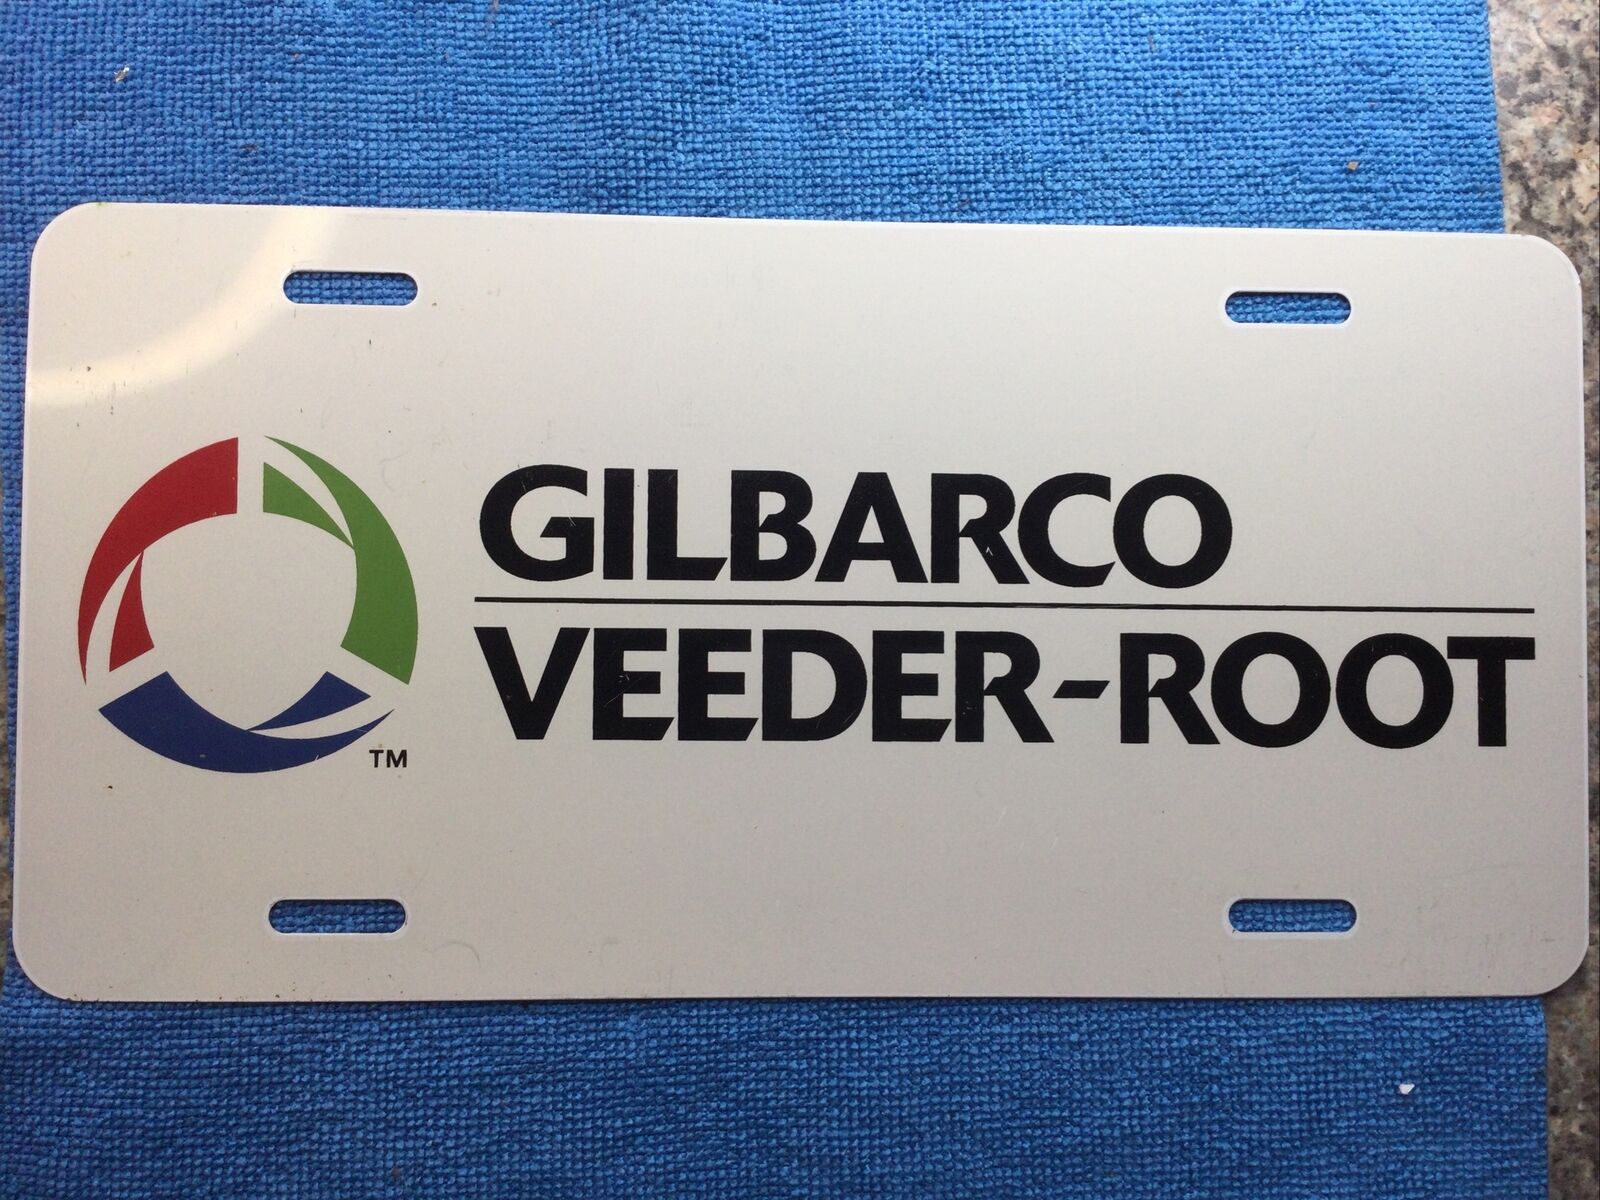 Vintage GILBARCO VEEDER-ROOT company car tag license plate Metal